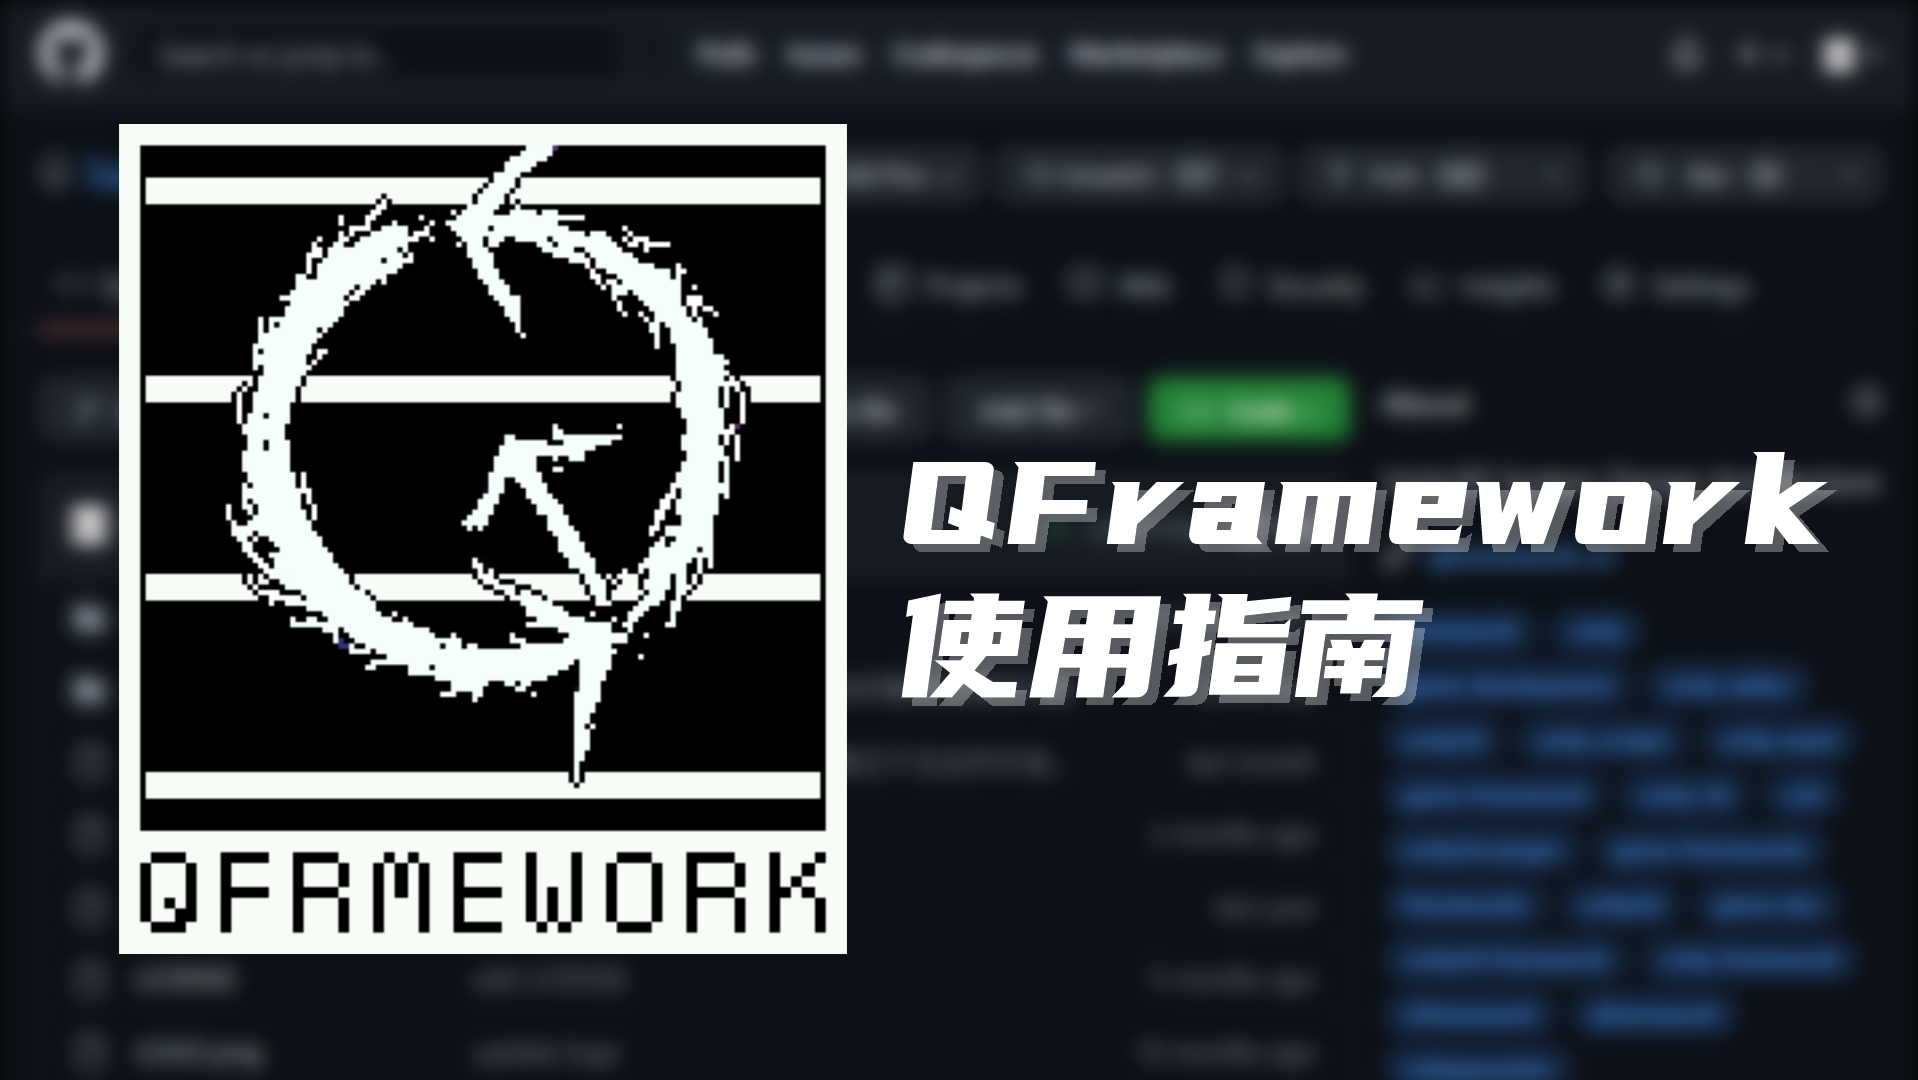 【Unity 框架】QFramework v1.0 使用指南 工具篇：04. ActionKit 时序动作执行系统  | Unity 游戏框架 | Unity 游戏开发 | Unity 独立游戏 